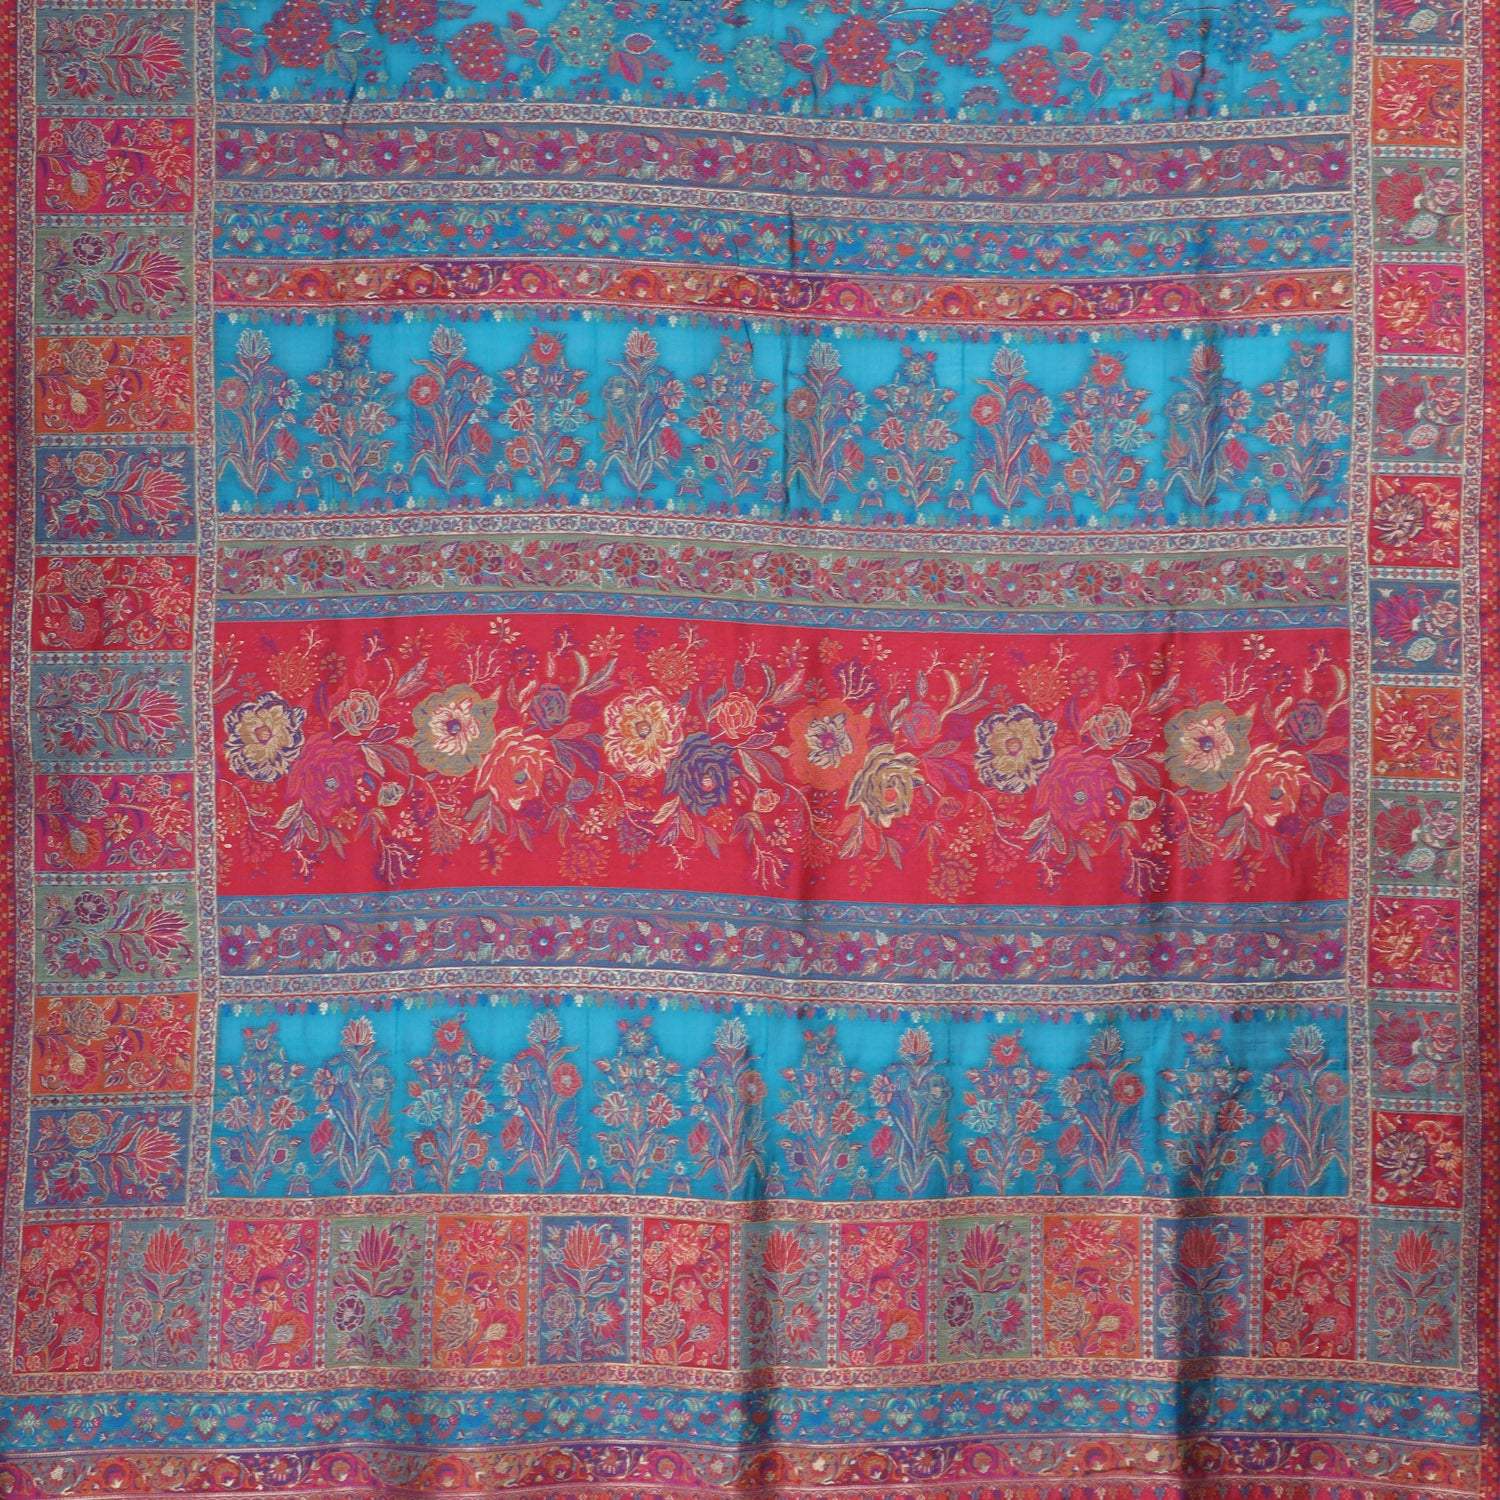 Cyan Blue Kani Silk Handloom Saree - Singhania's